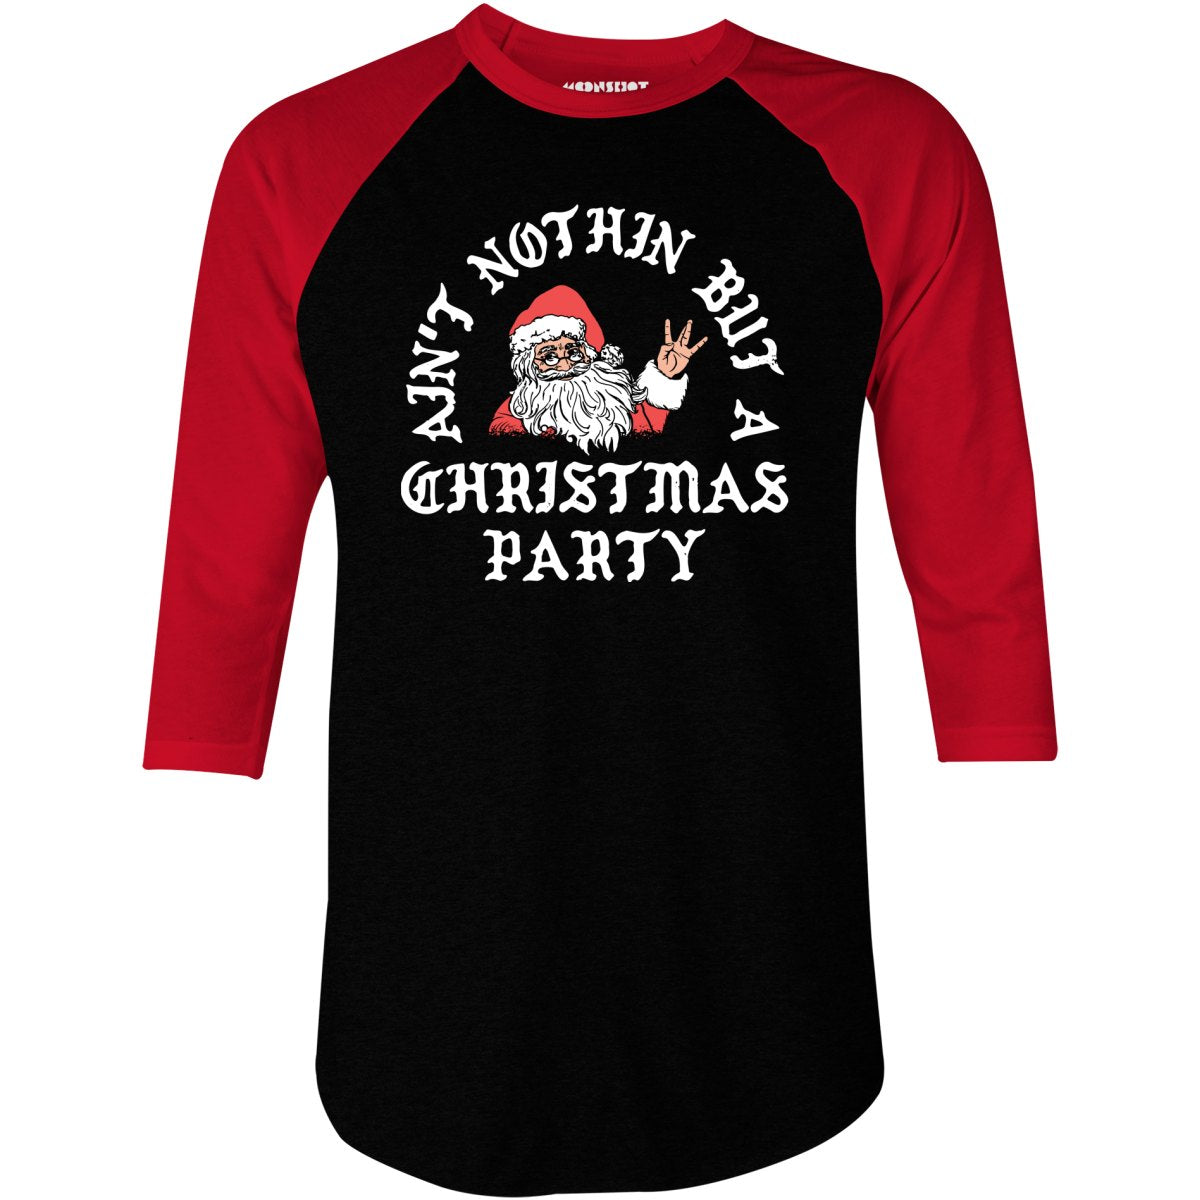 Ain't Nothin' But a Christmas Party - 3/4 Sleeve Raglan T-Shirt